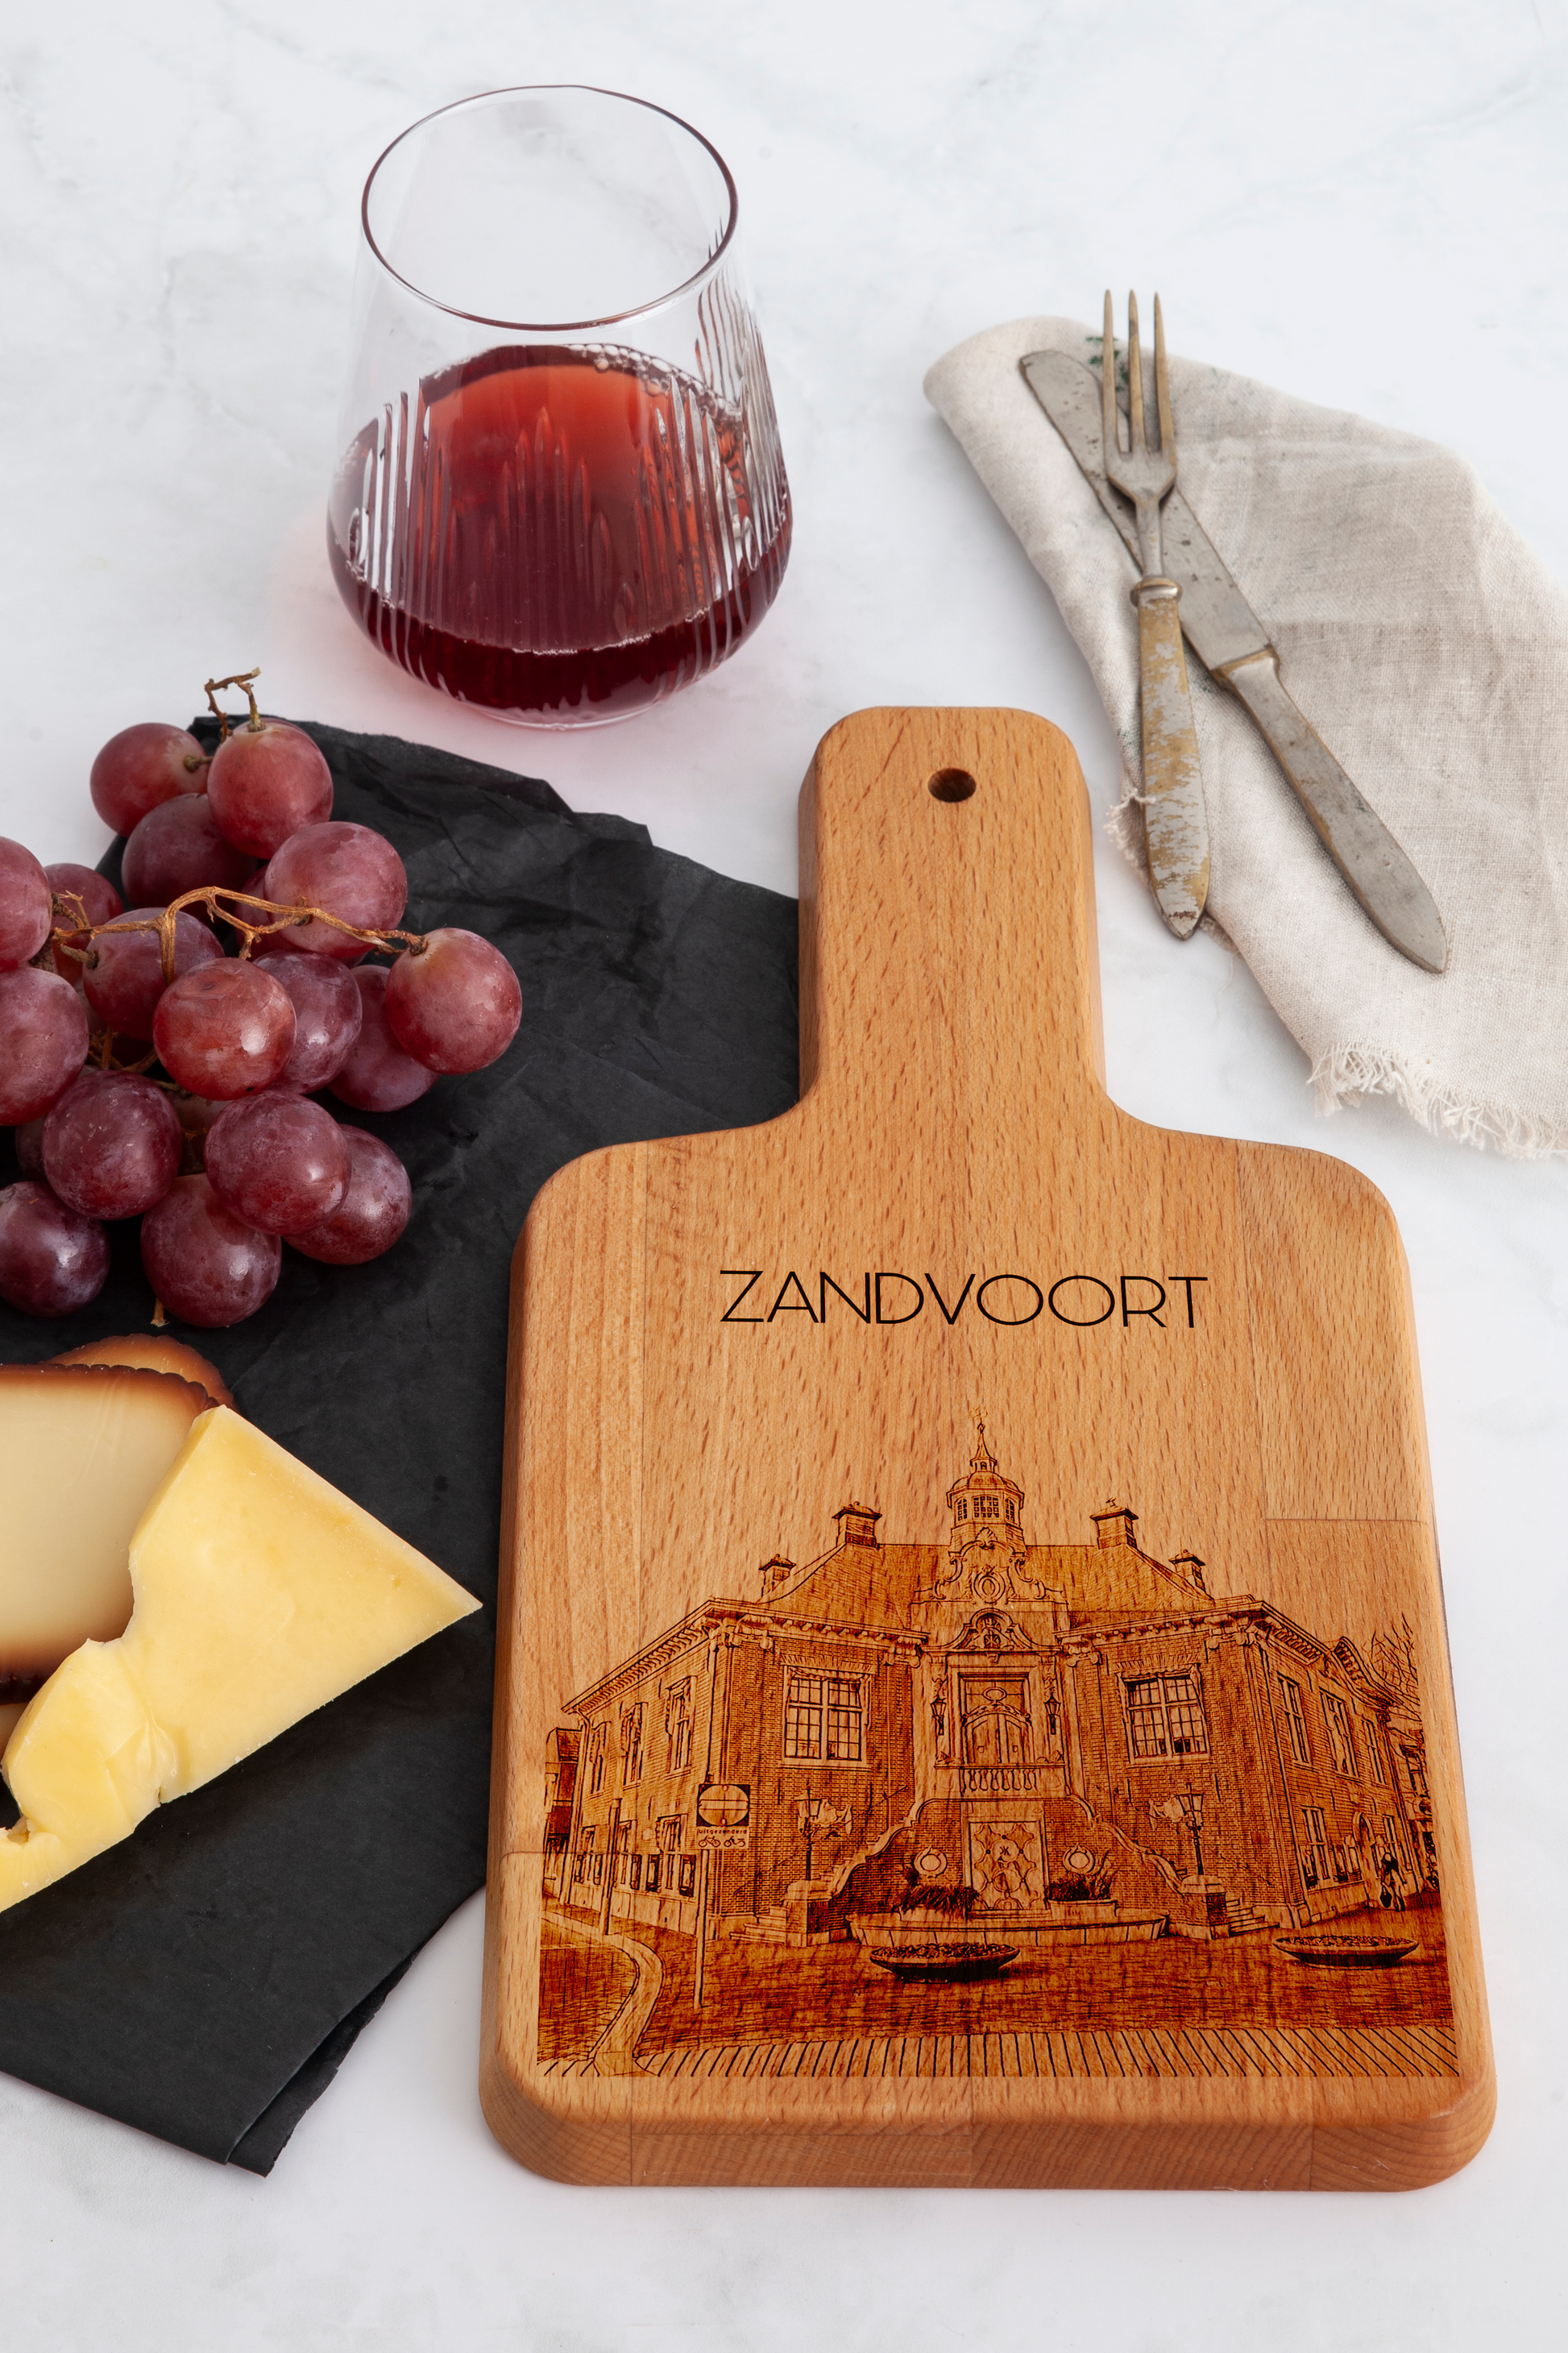 Zandvoort, Stadhuis, cheese board, on countertop